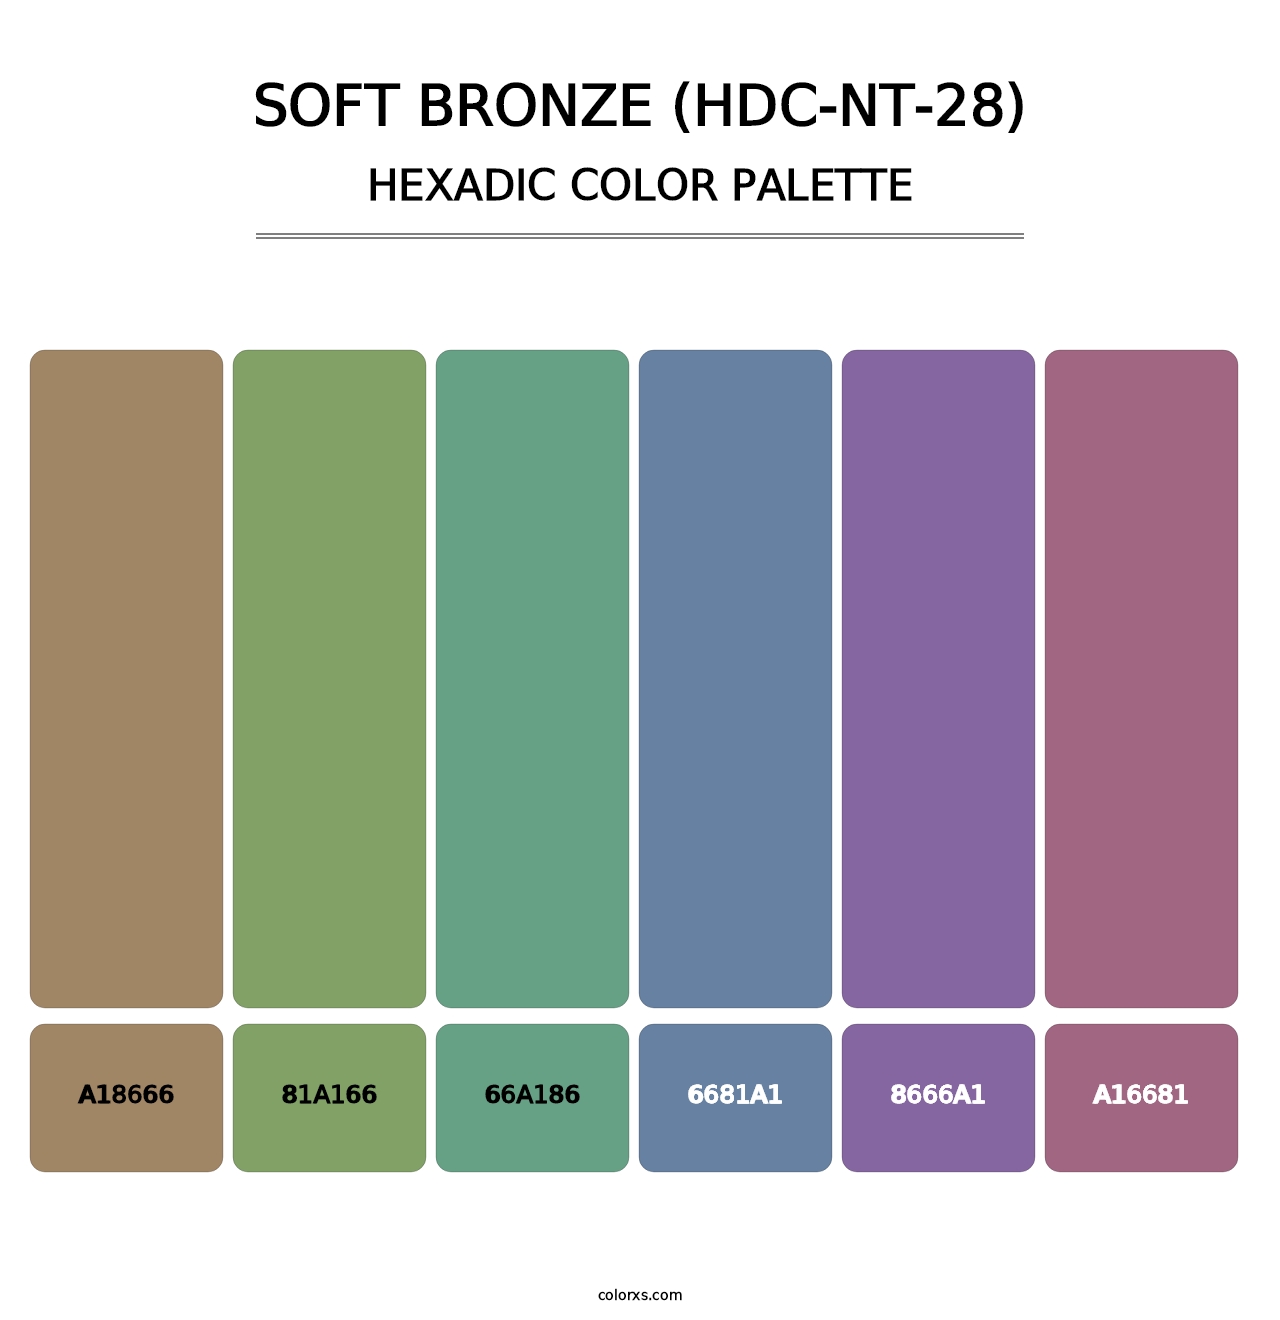 Soft Bronze (HDC-NT-28) - Hexadic Color Palette